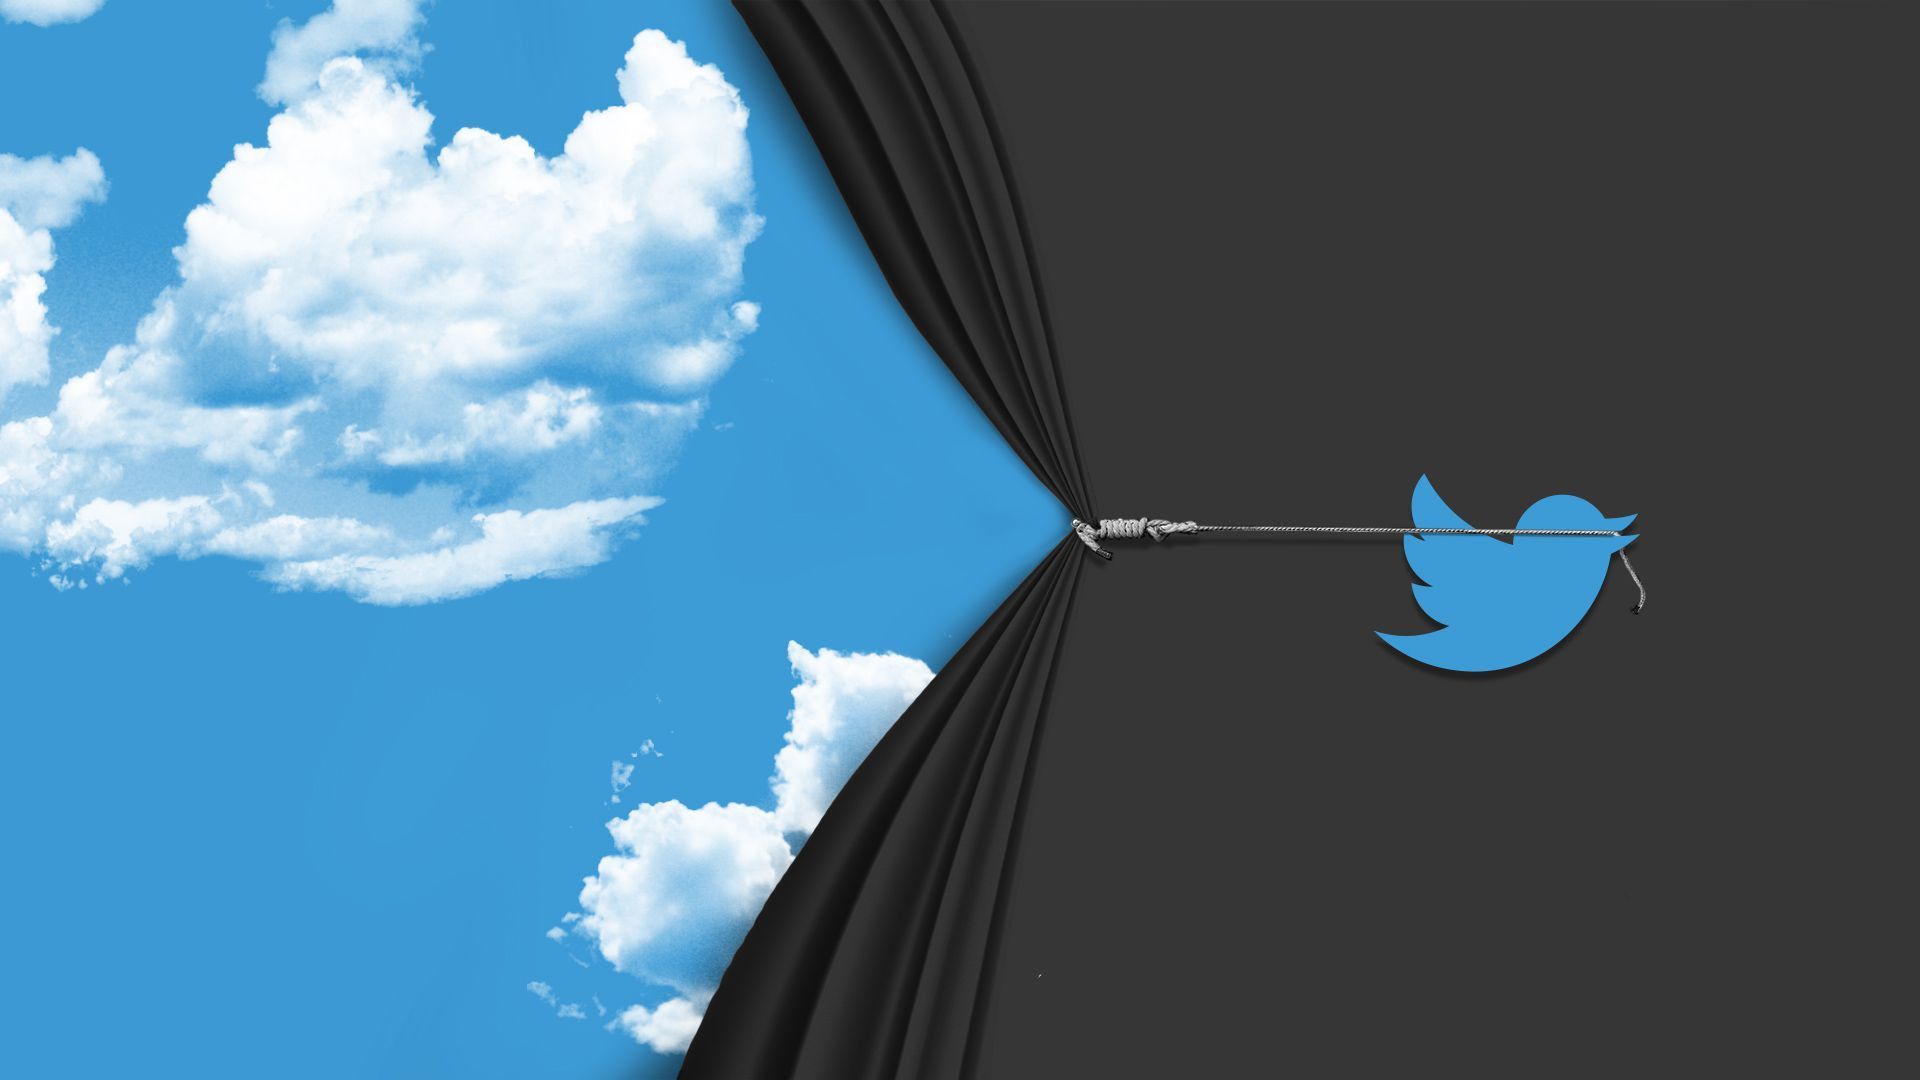 The Twitter logo bird pulling the curtain